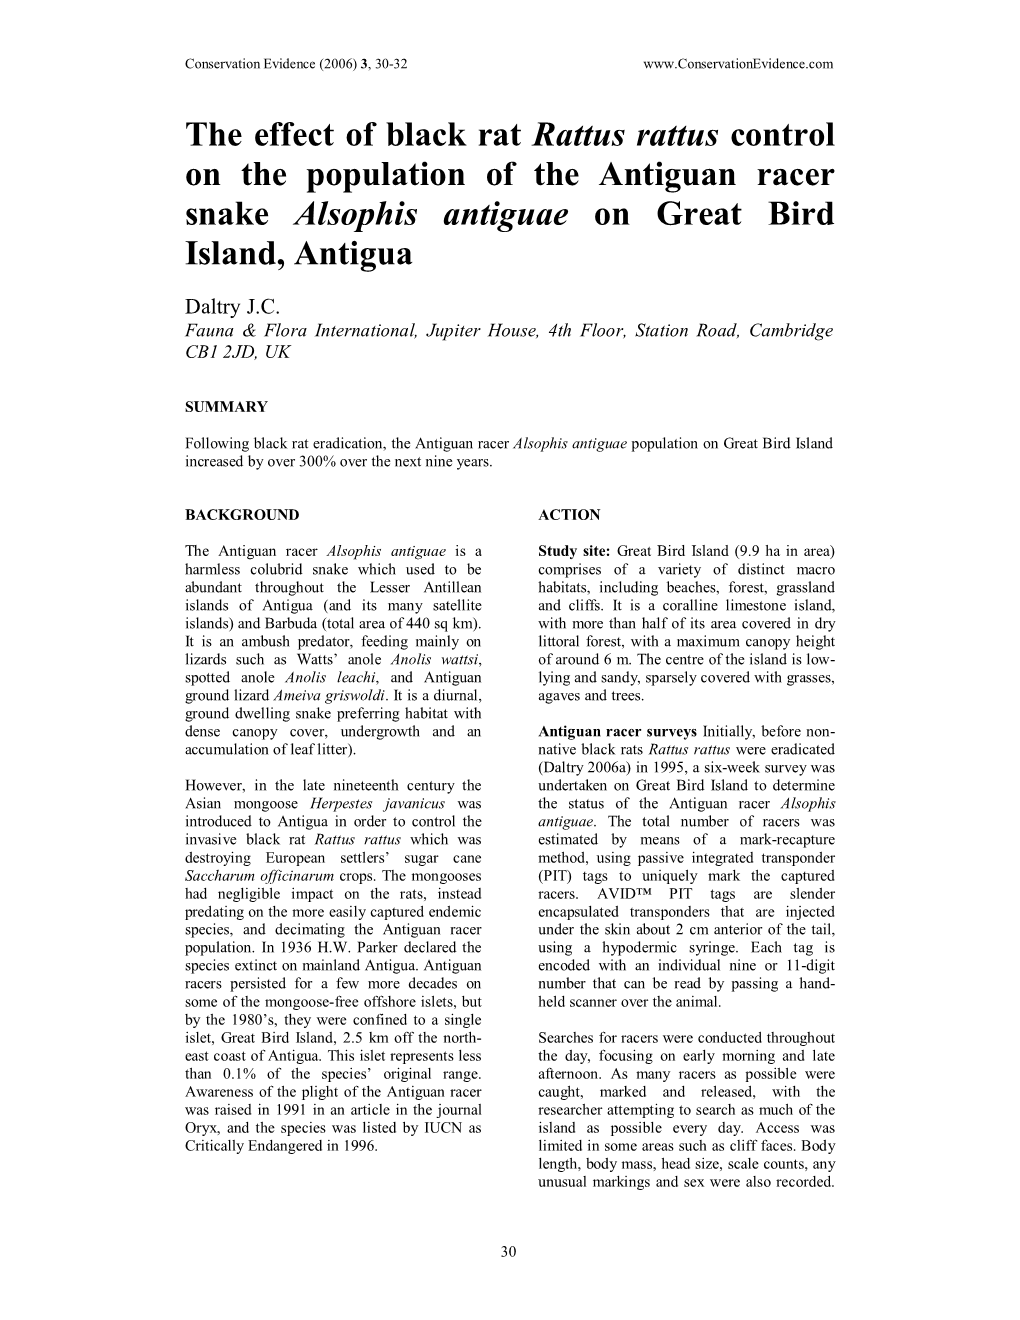 The Effect of Black Rat Rattus Rattus Control on the Population of the Antiguan Racer Snake Alsophis Antiguae on Great Bird Island, Antigua